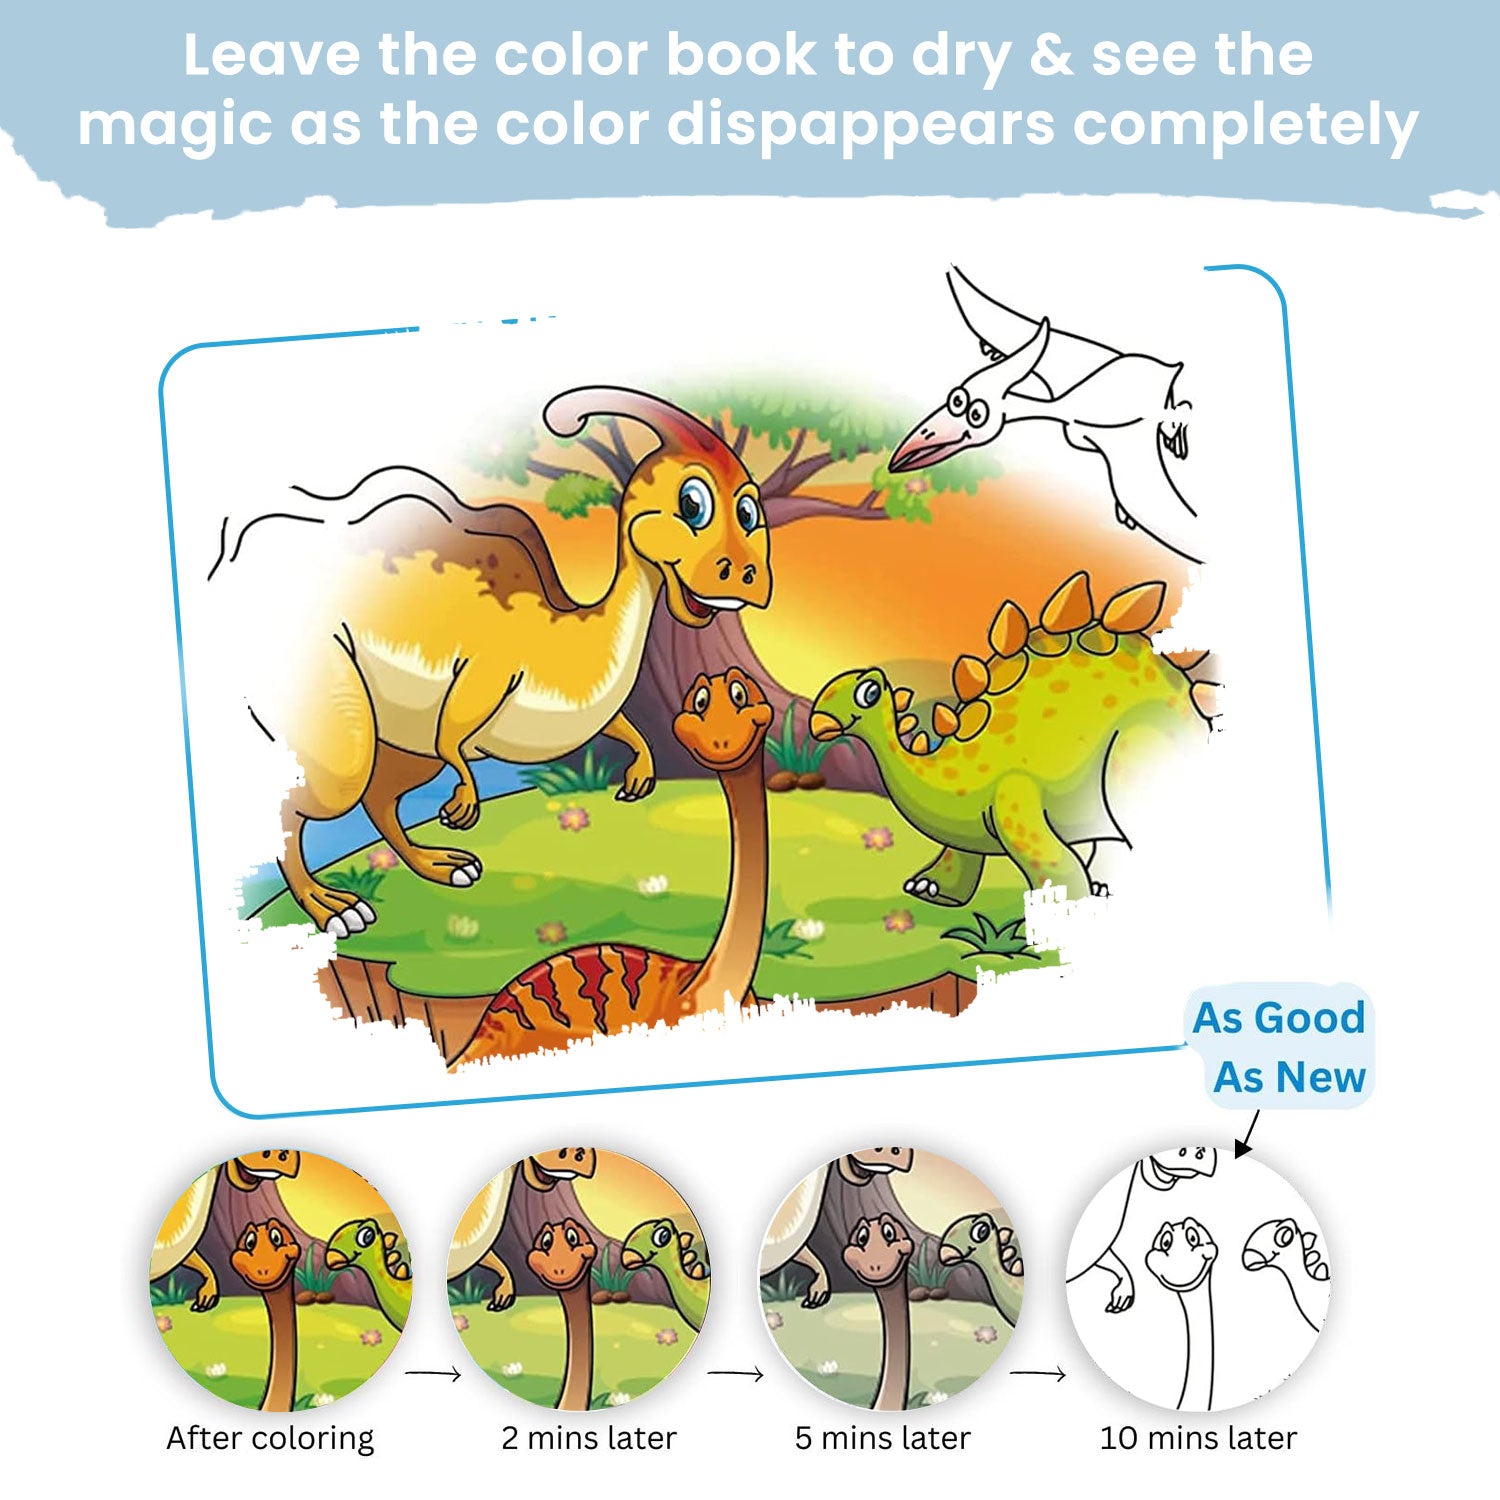 Baby Moo Animal World Reusable Magic Water Colouring Book - Green